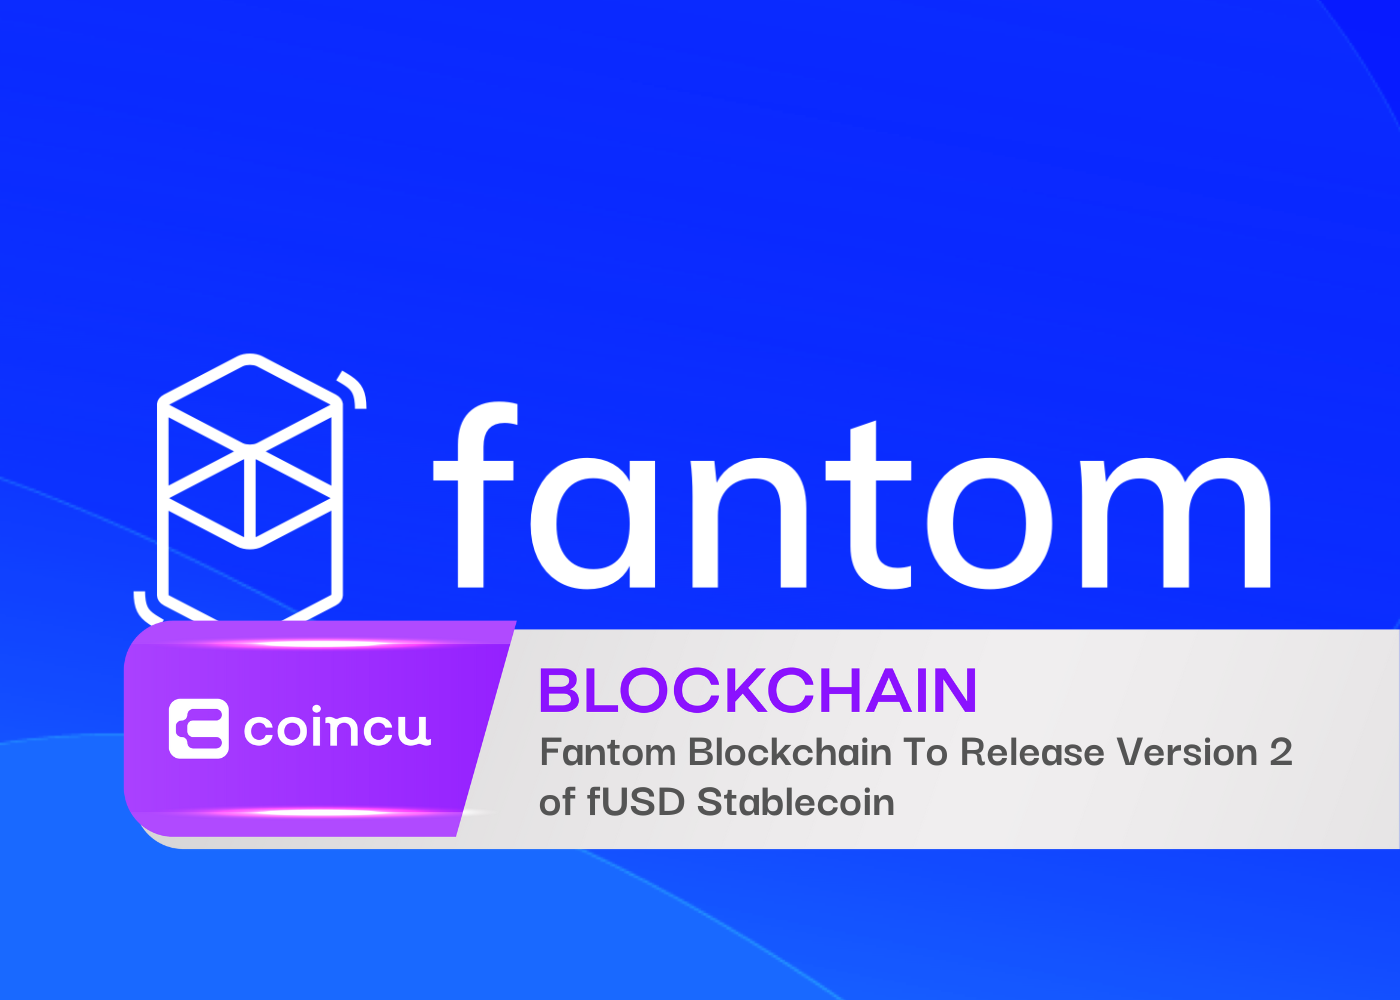 Fantom Blockchain To Release Version 2